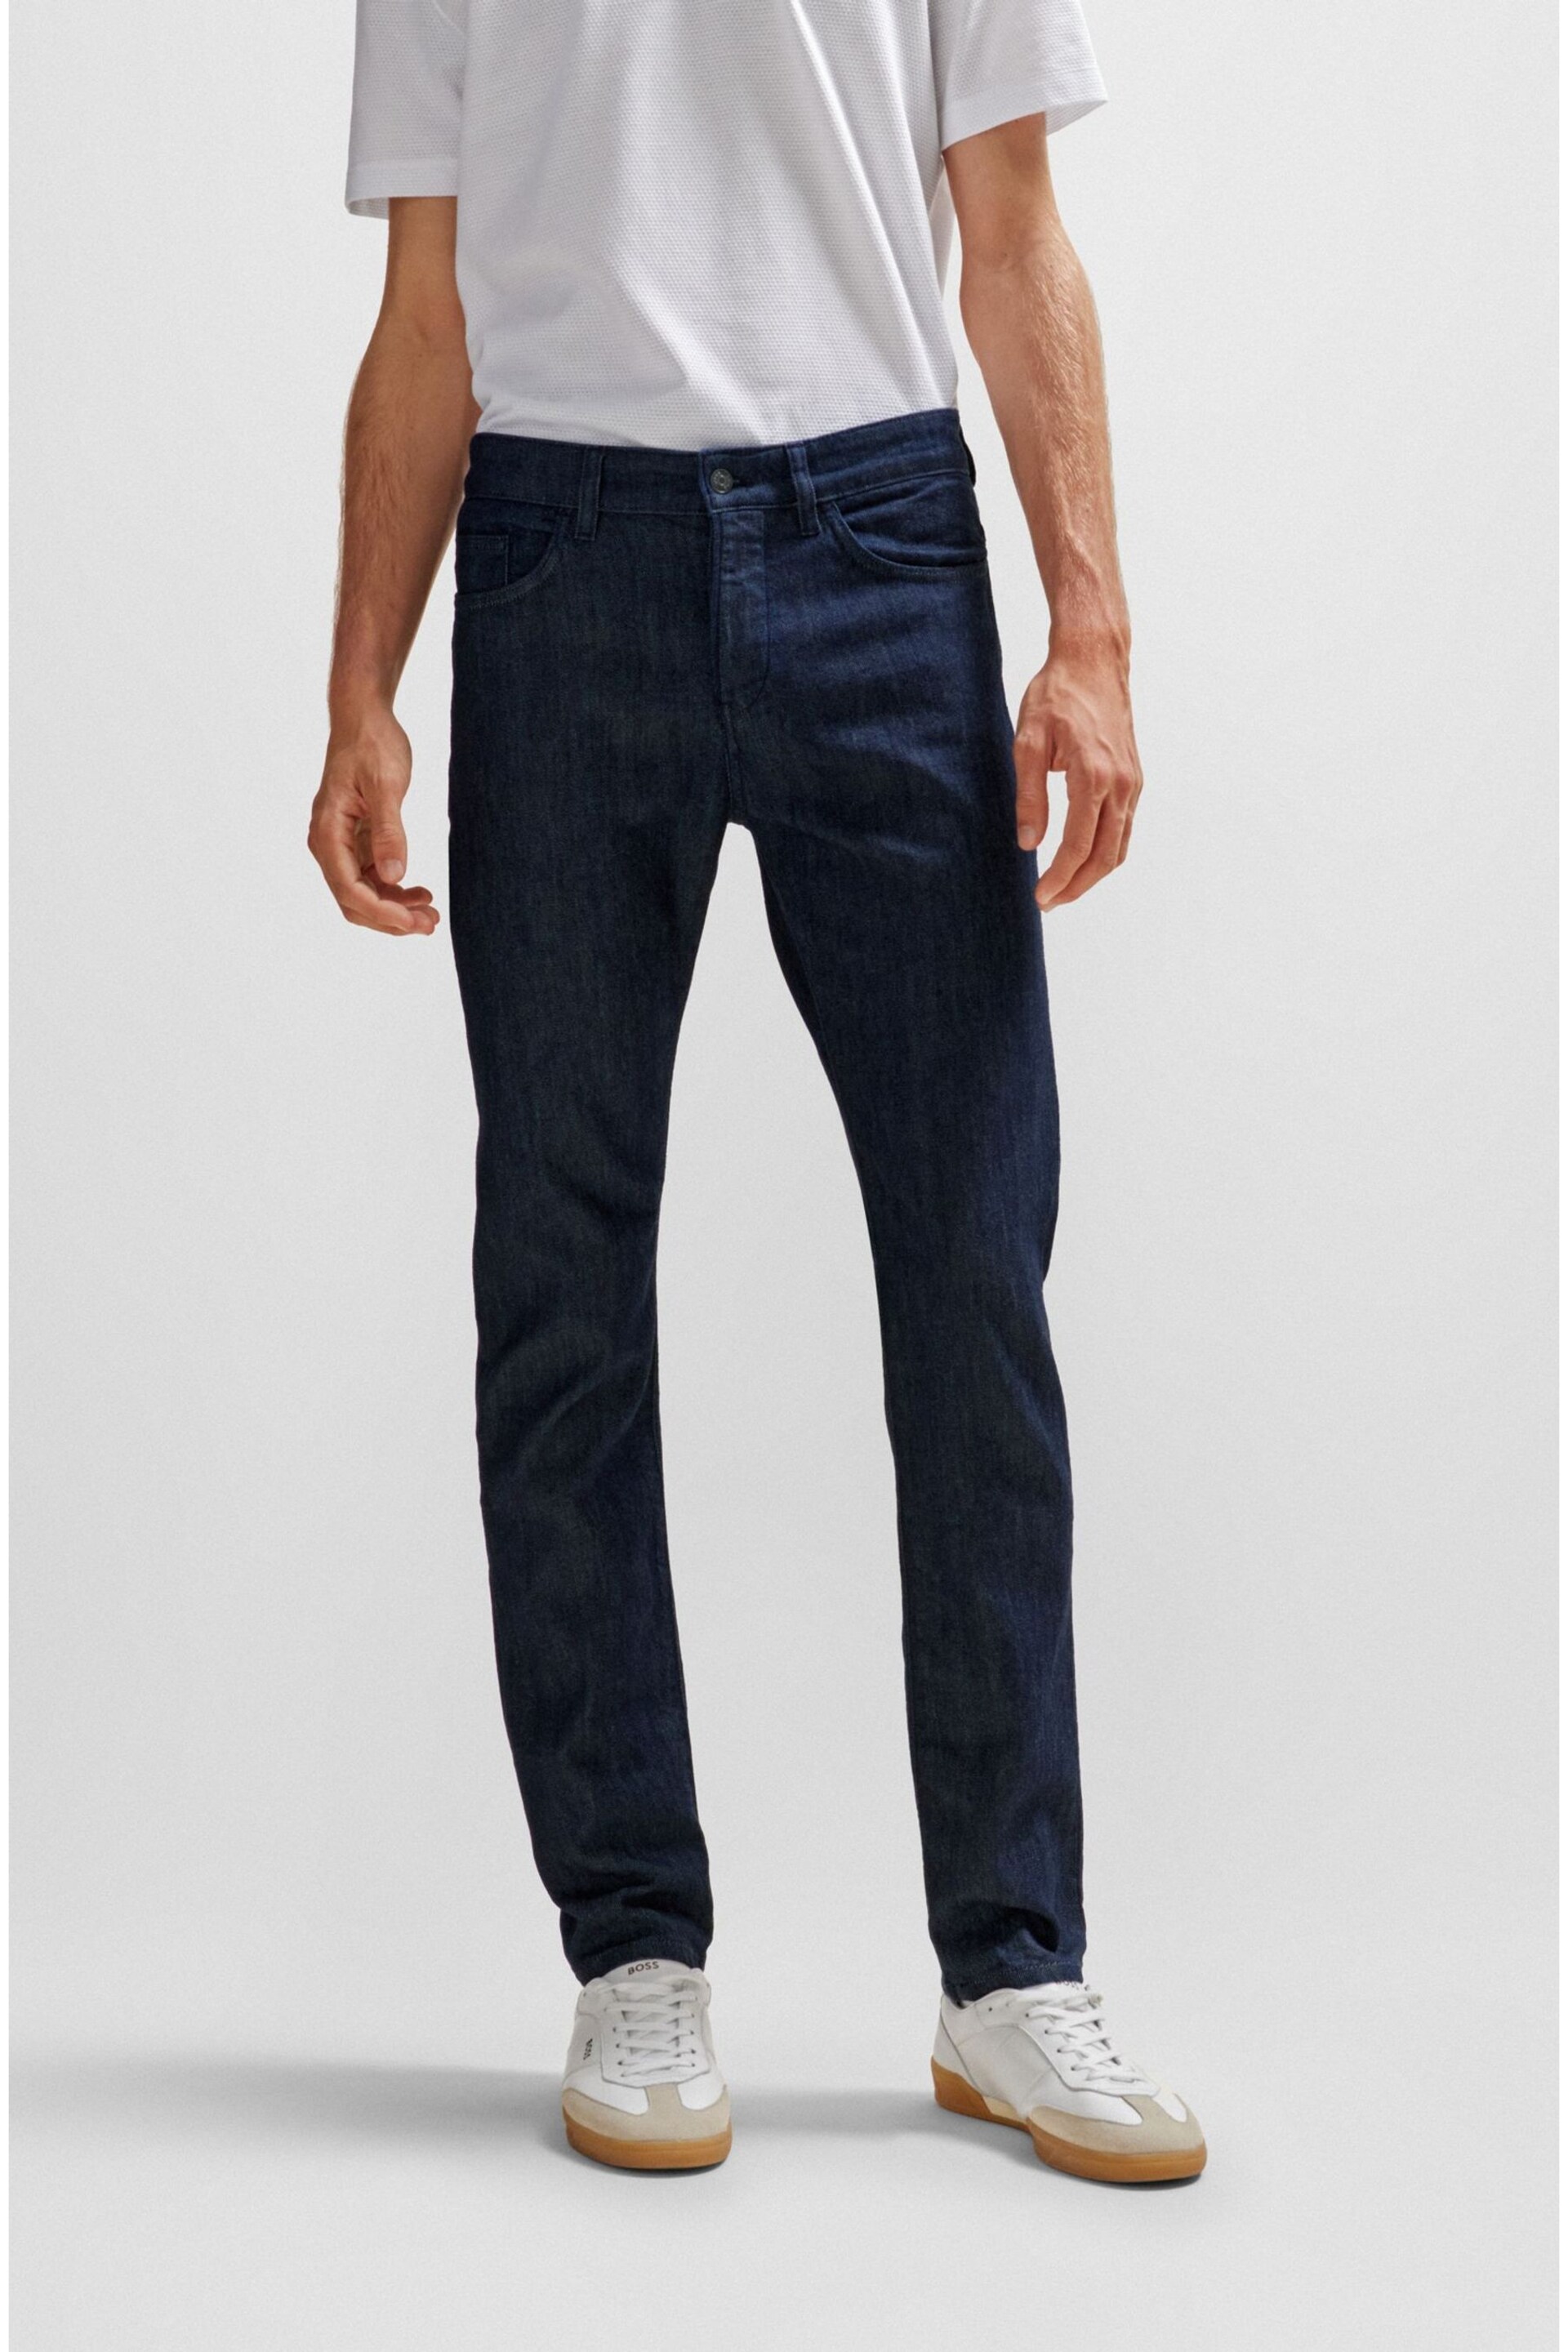 BOSS Dark Indgio Wash Delaware Slim Fit Jeans - Image 1 of 5